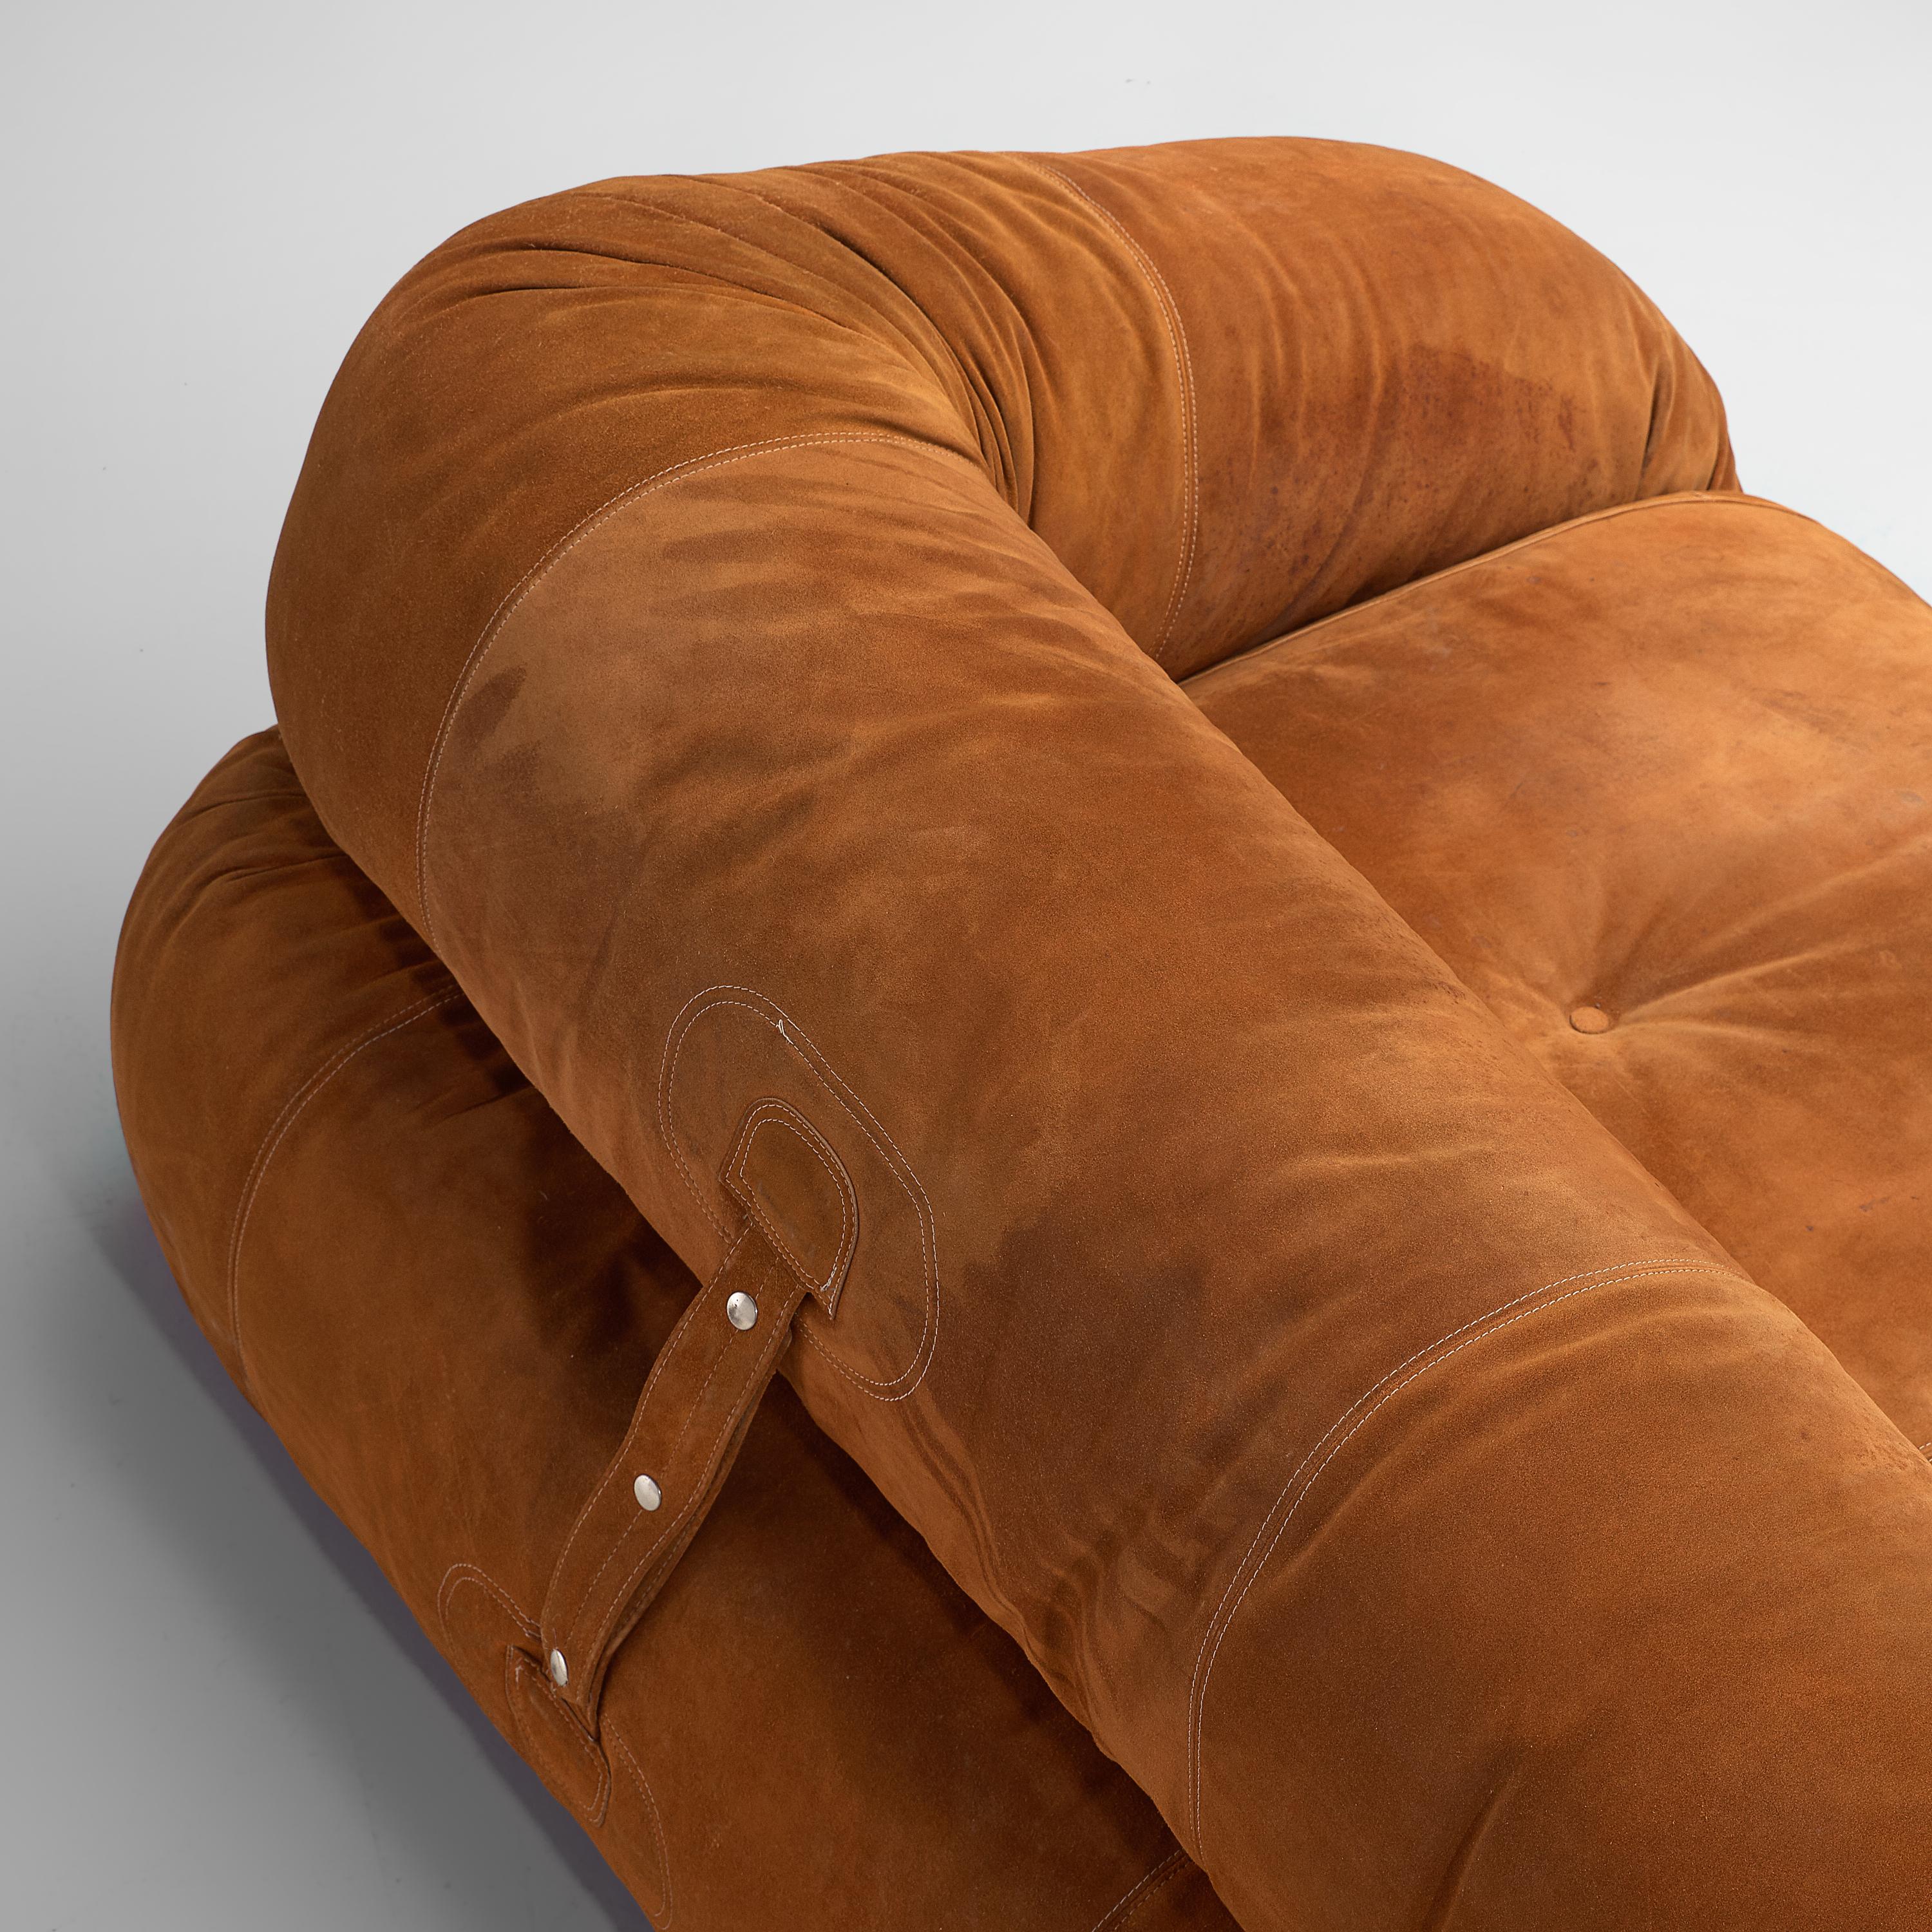 anfibio sofa for sale